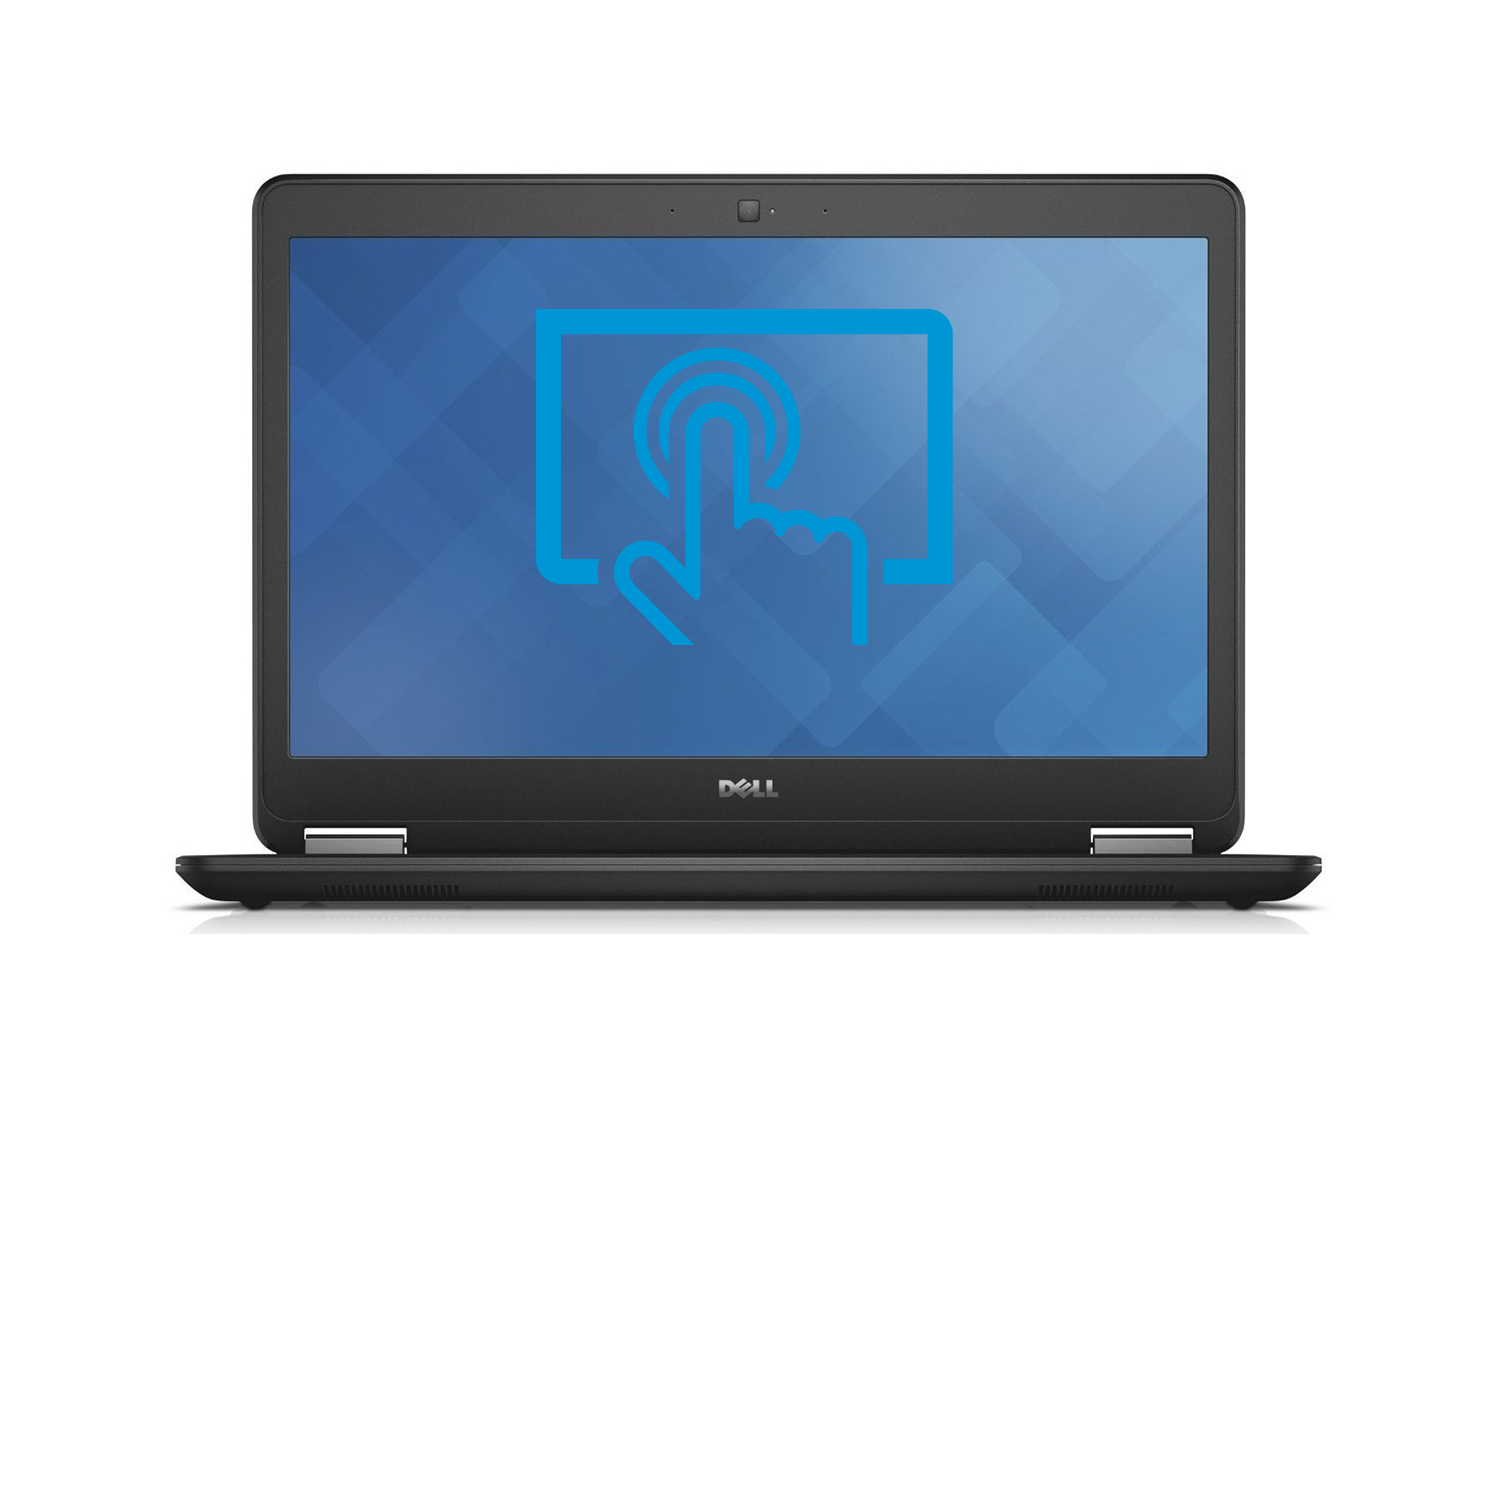 Refurbished (Good) - Dell Latitude E7450 Touch Screen Business Ultrabook: i5-5300U 2.3GHz, 8GB RAM, 128GB SSD, HDMI, Webcam, 14" Touch Screen, Windows 11 Pro "â€œ